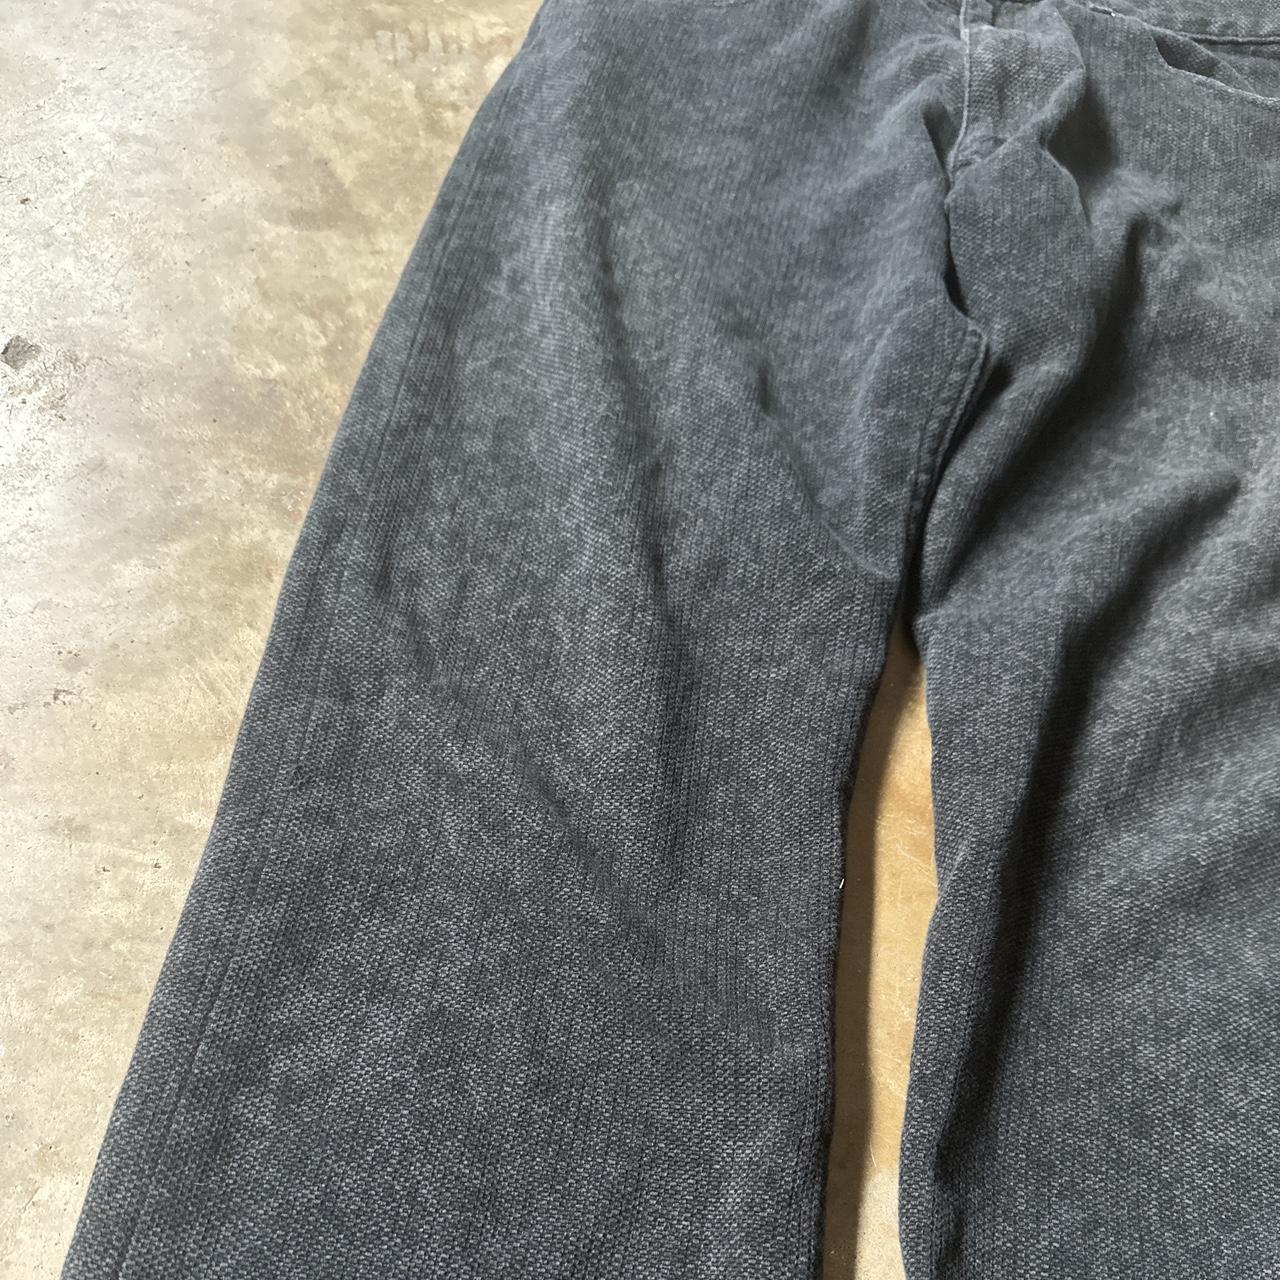 Tornado Mart Cracked Print Pants Size Large Waist:... - Depop